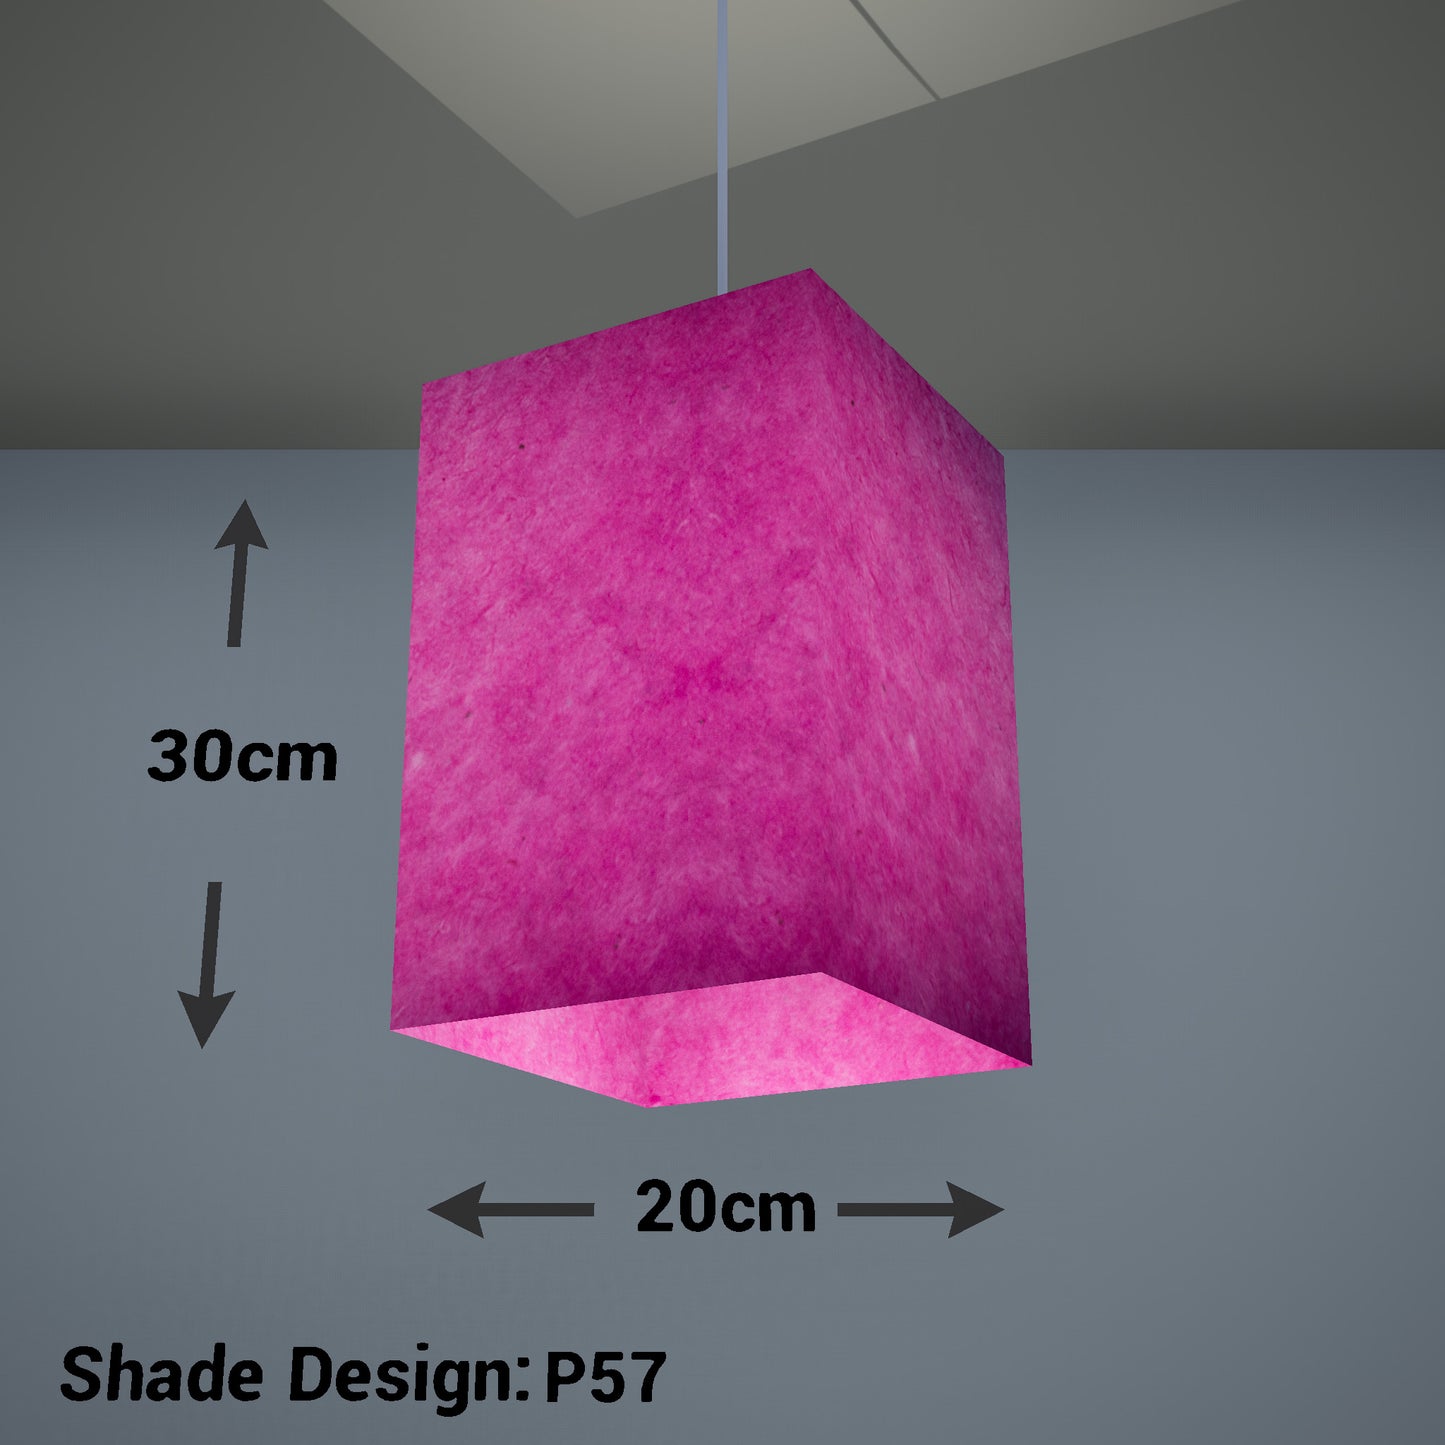 Square Lamp Shade - P57 - Hot Pink Lokta, 20cm(w) x 30cm(h) x 20cm(d)